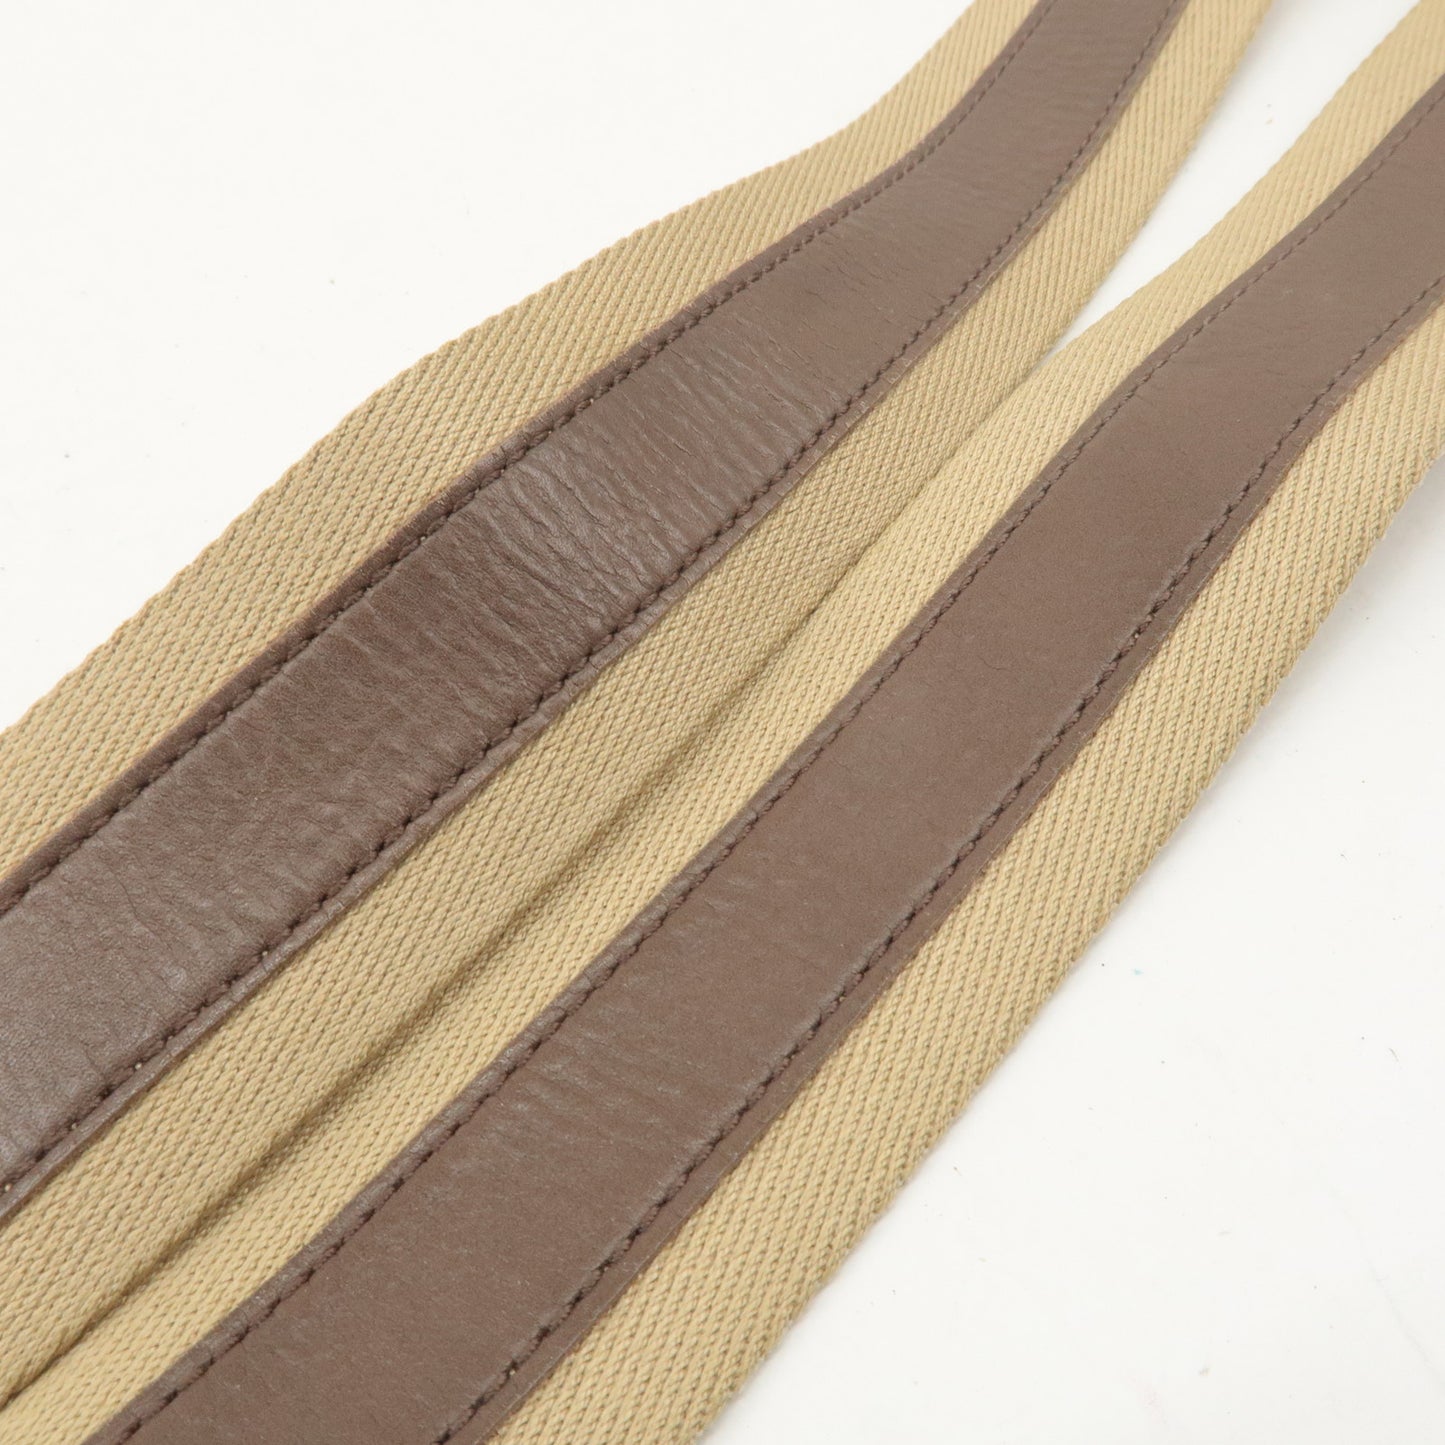 BOTTEGA VENETA Intrecciato Leather Shoulder Bag Brown 161623